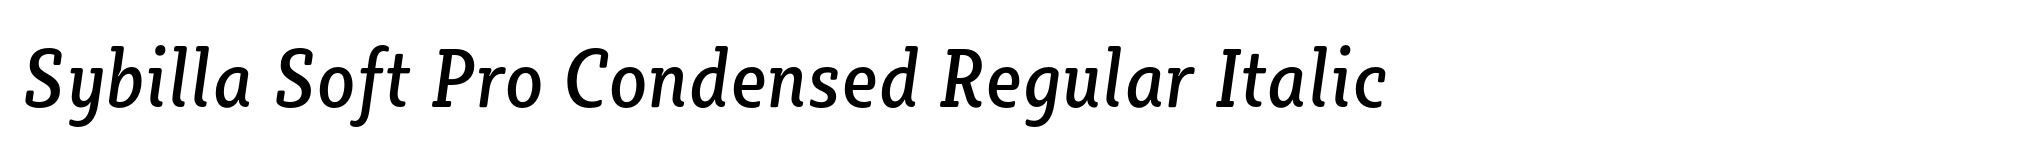 Sybilla Soft Pro Condensed Regular Italic image